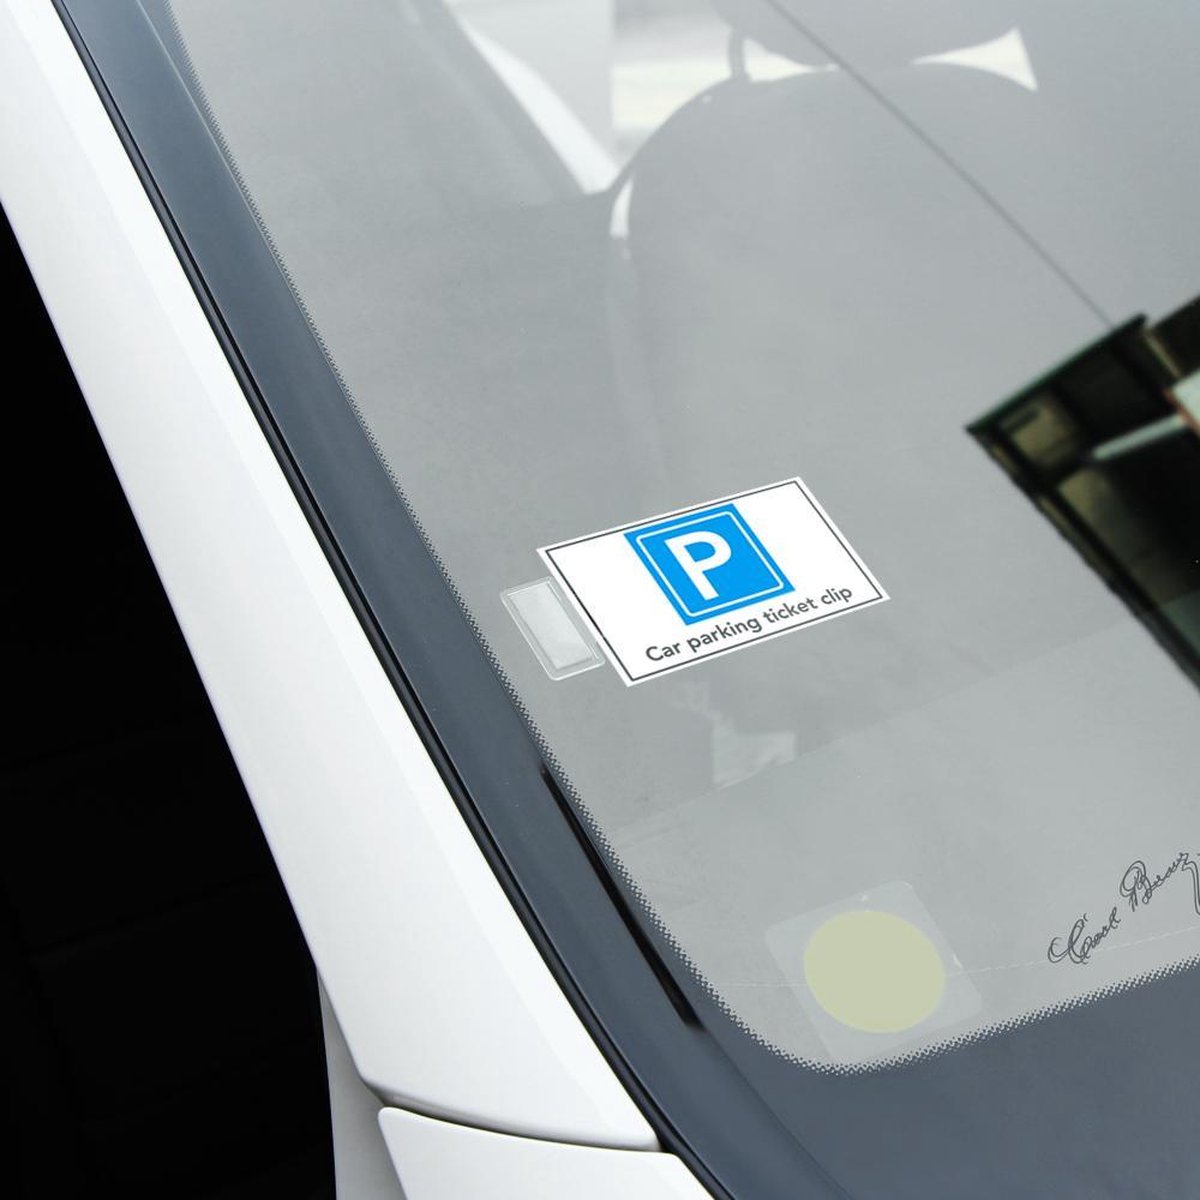 Car Parking Ticket Clip Fastener Auto Interior Organizer - Temu